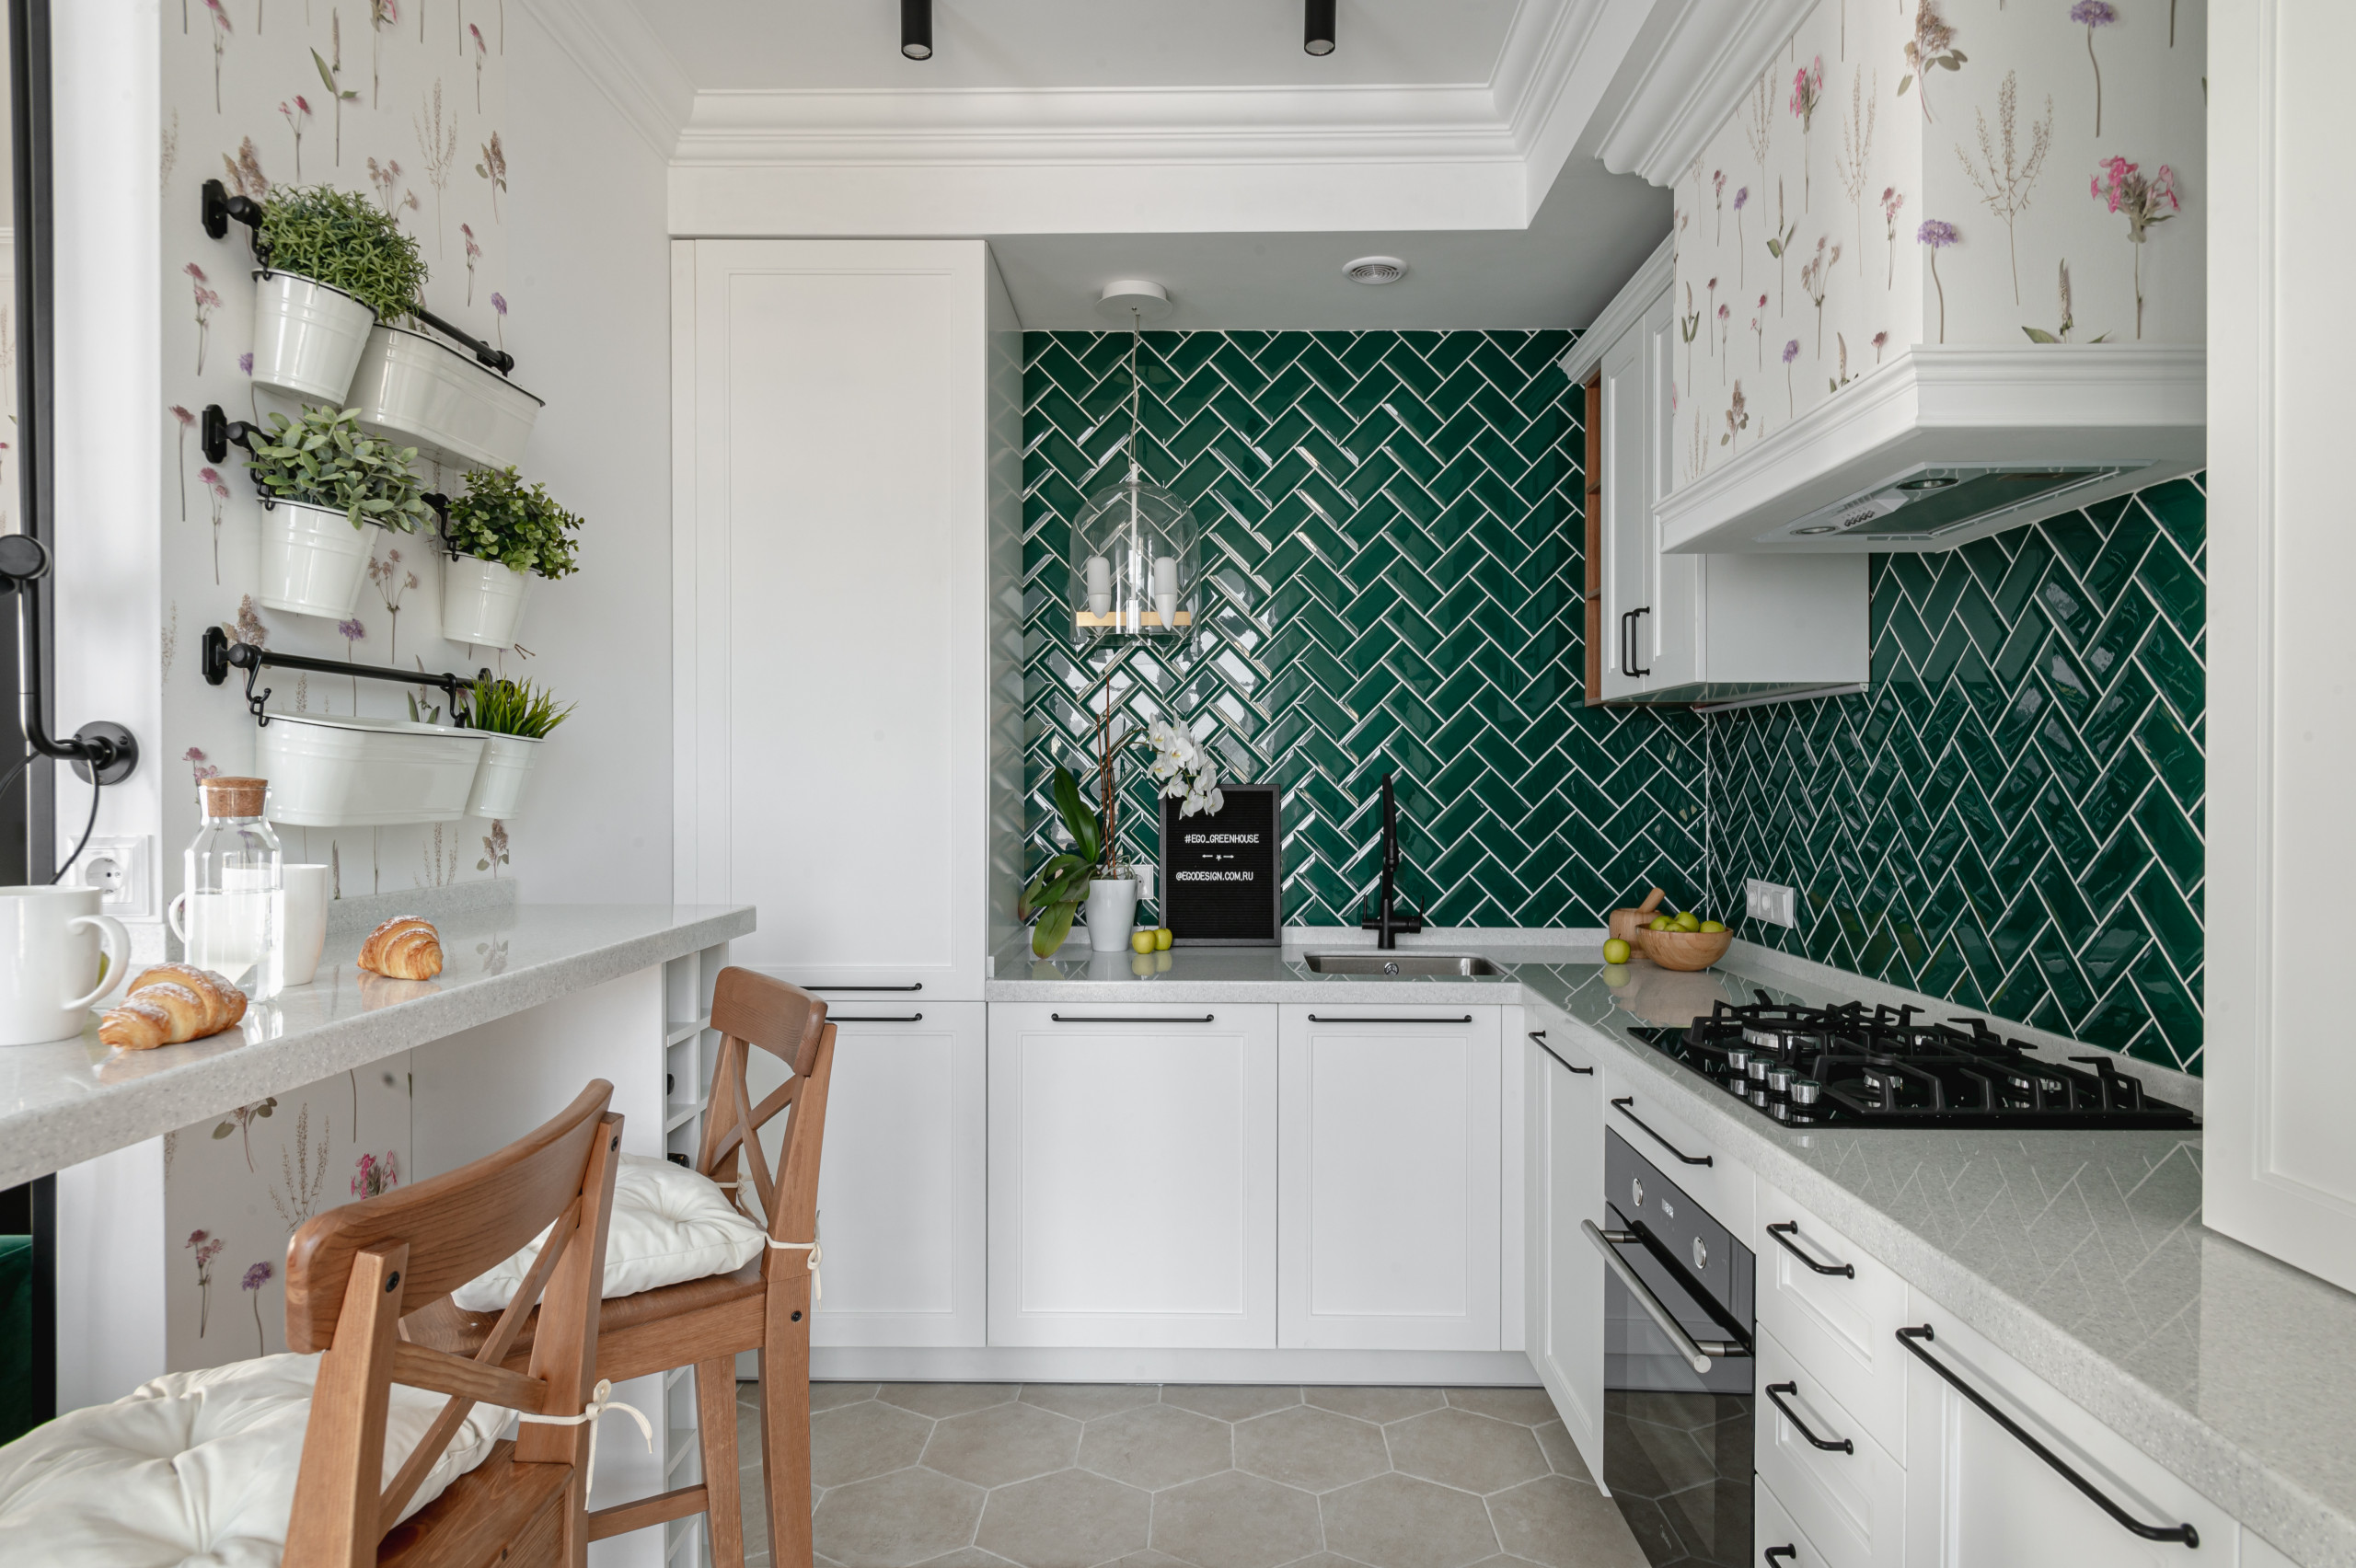 Дизайн пола на кухне: фото красивой плитки для отделки